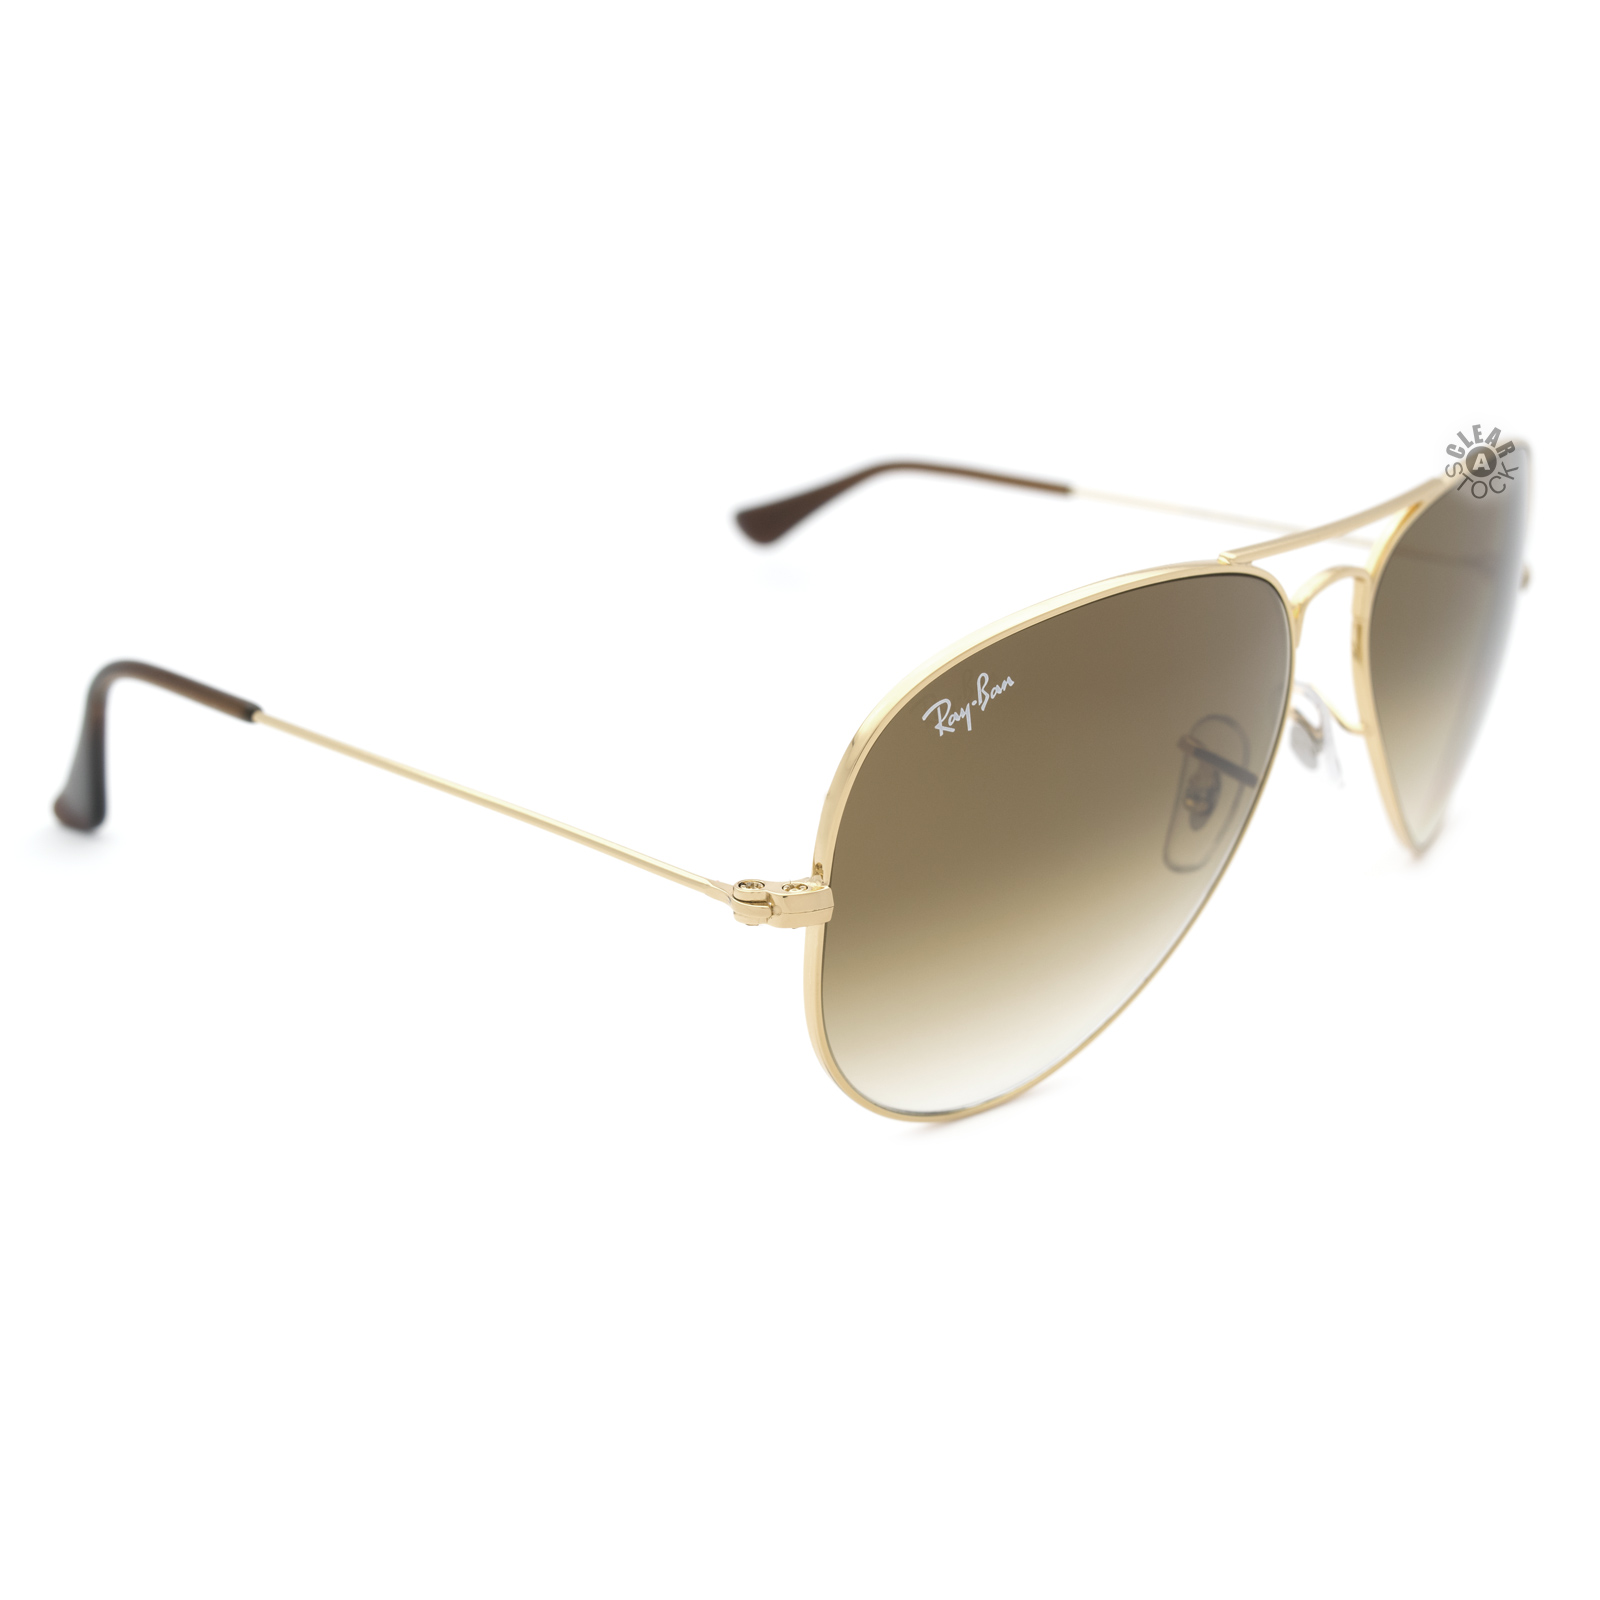 Ray Ban Rb3025 001 51 Aviator Sunglasses Gold Light Brown Gradient 58mm Usa